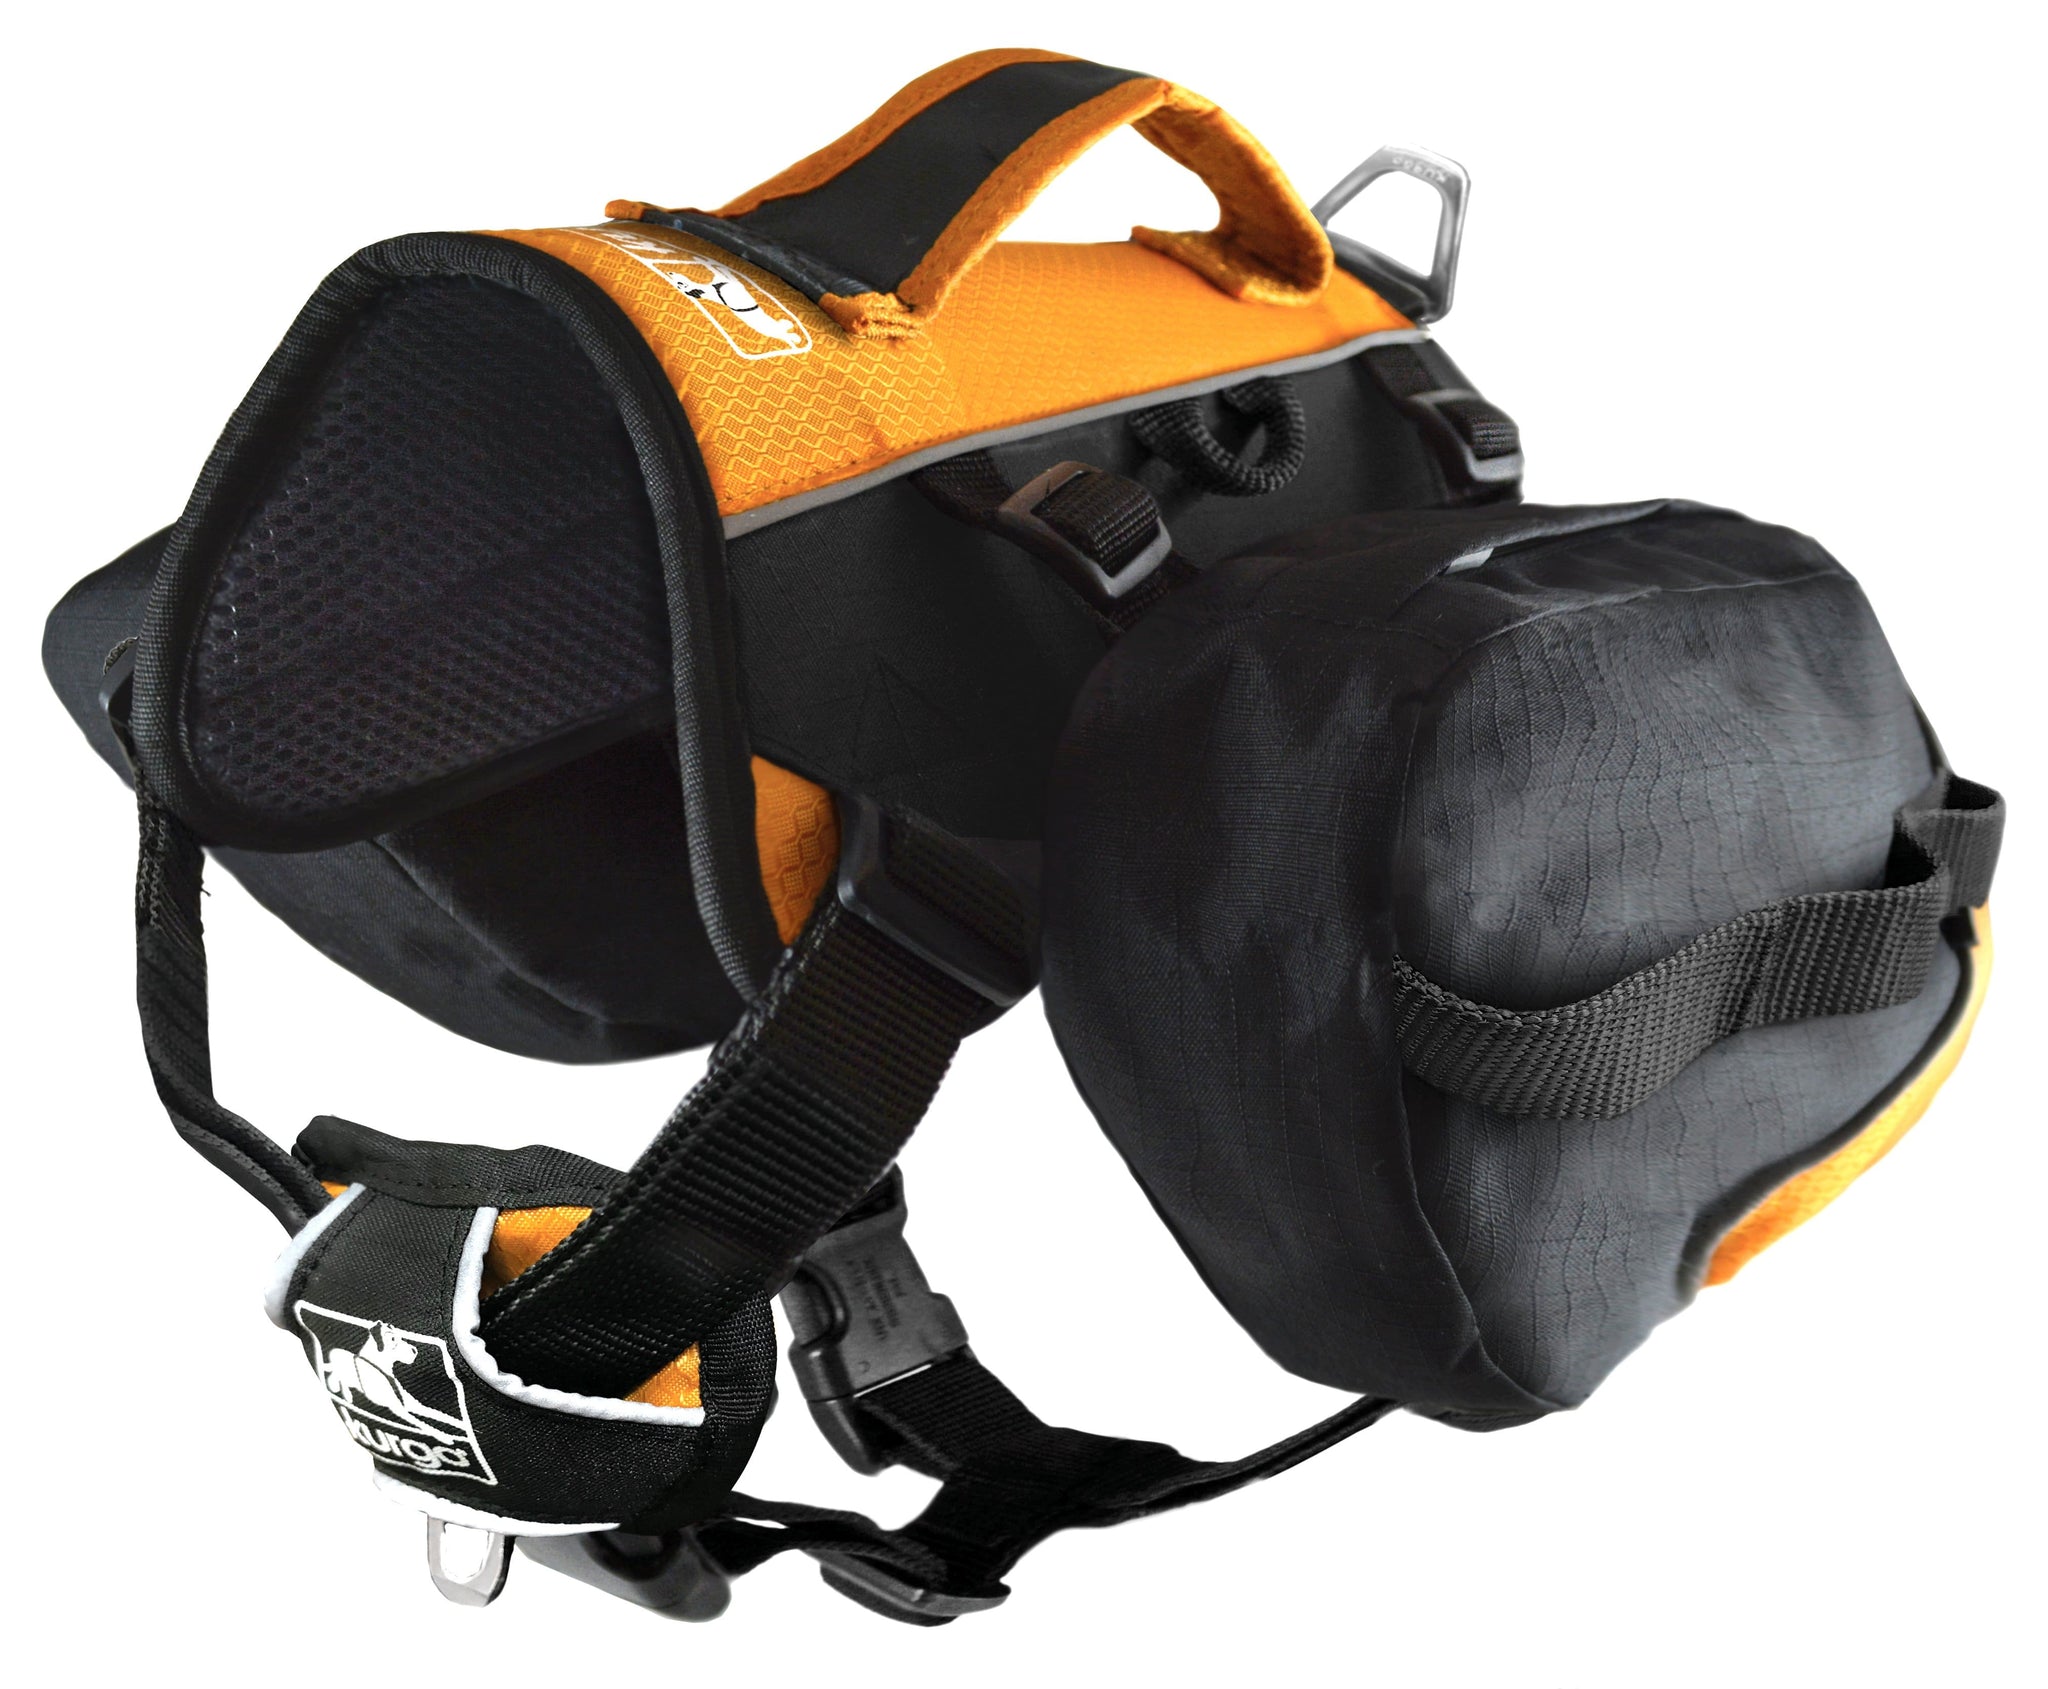 The Kurgo Baxter Dog Backpack in black and orange.